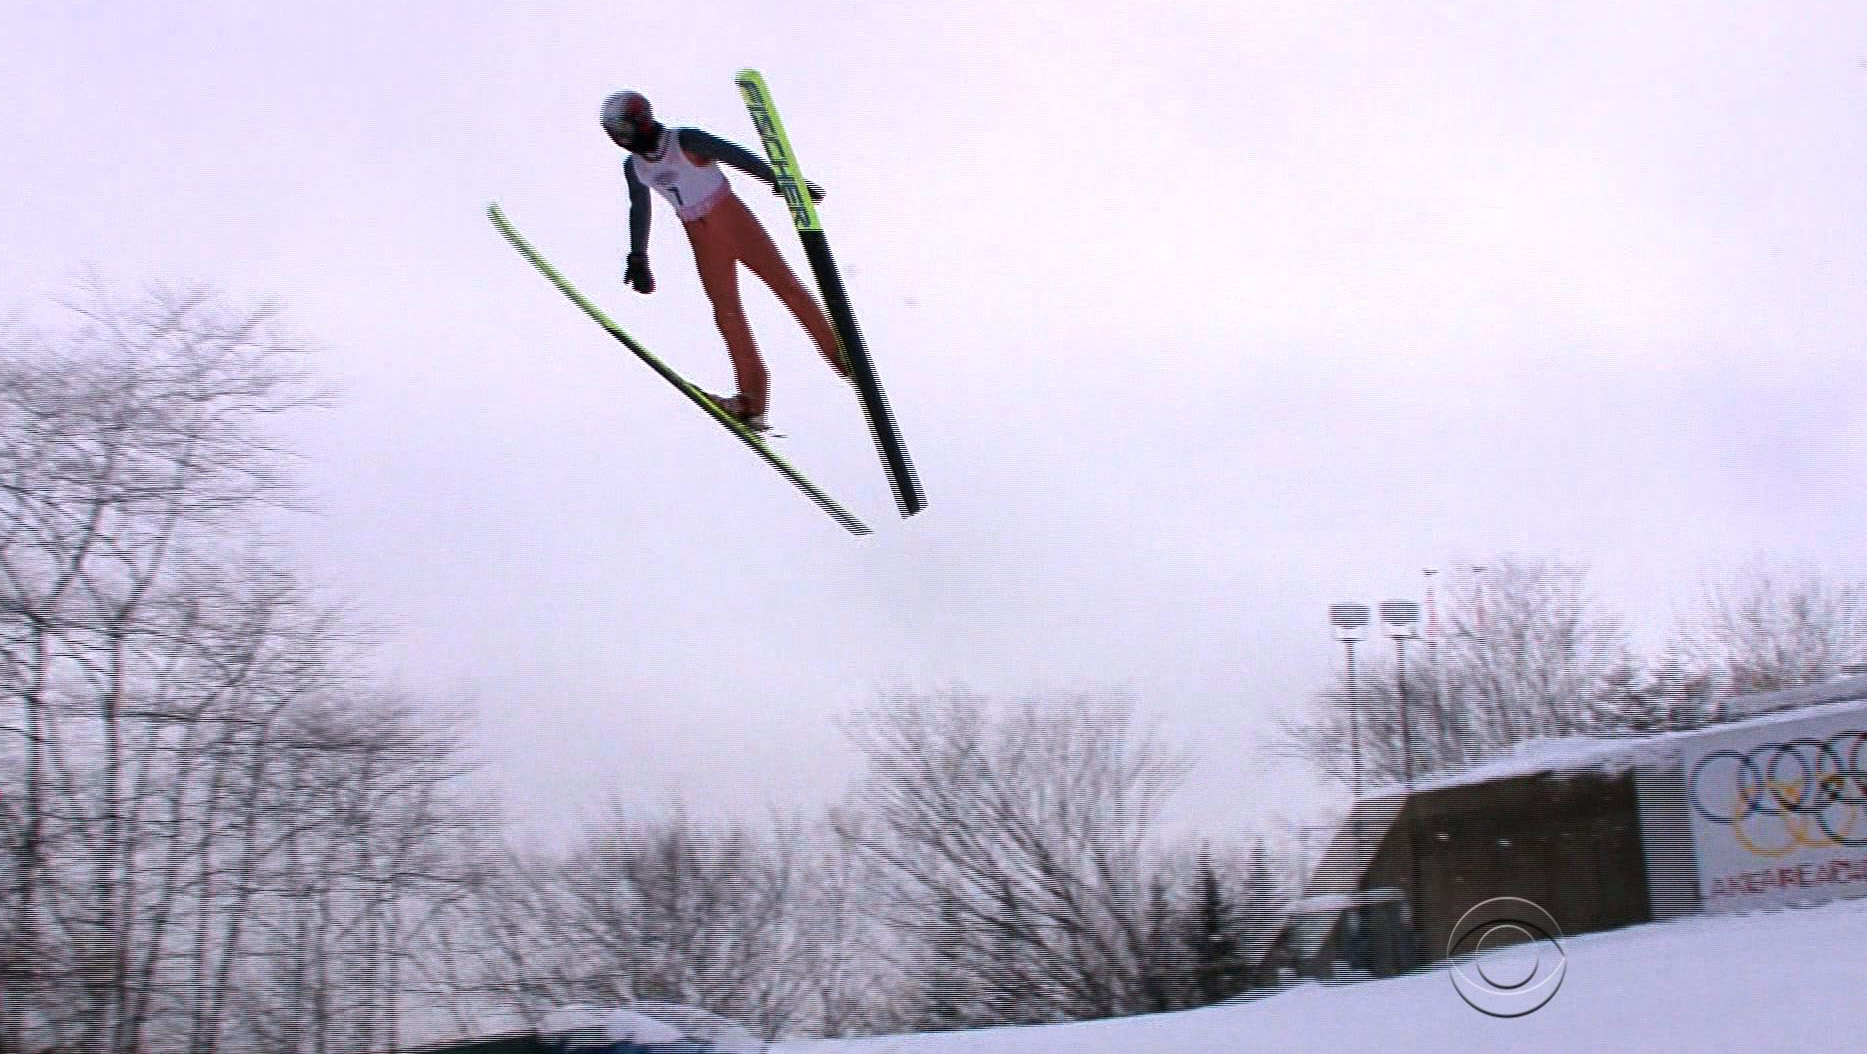 women-s-ski-jumping-finally-makes-it-to-olympics-cbs-news